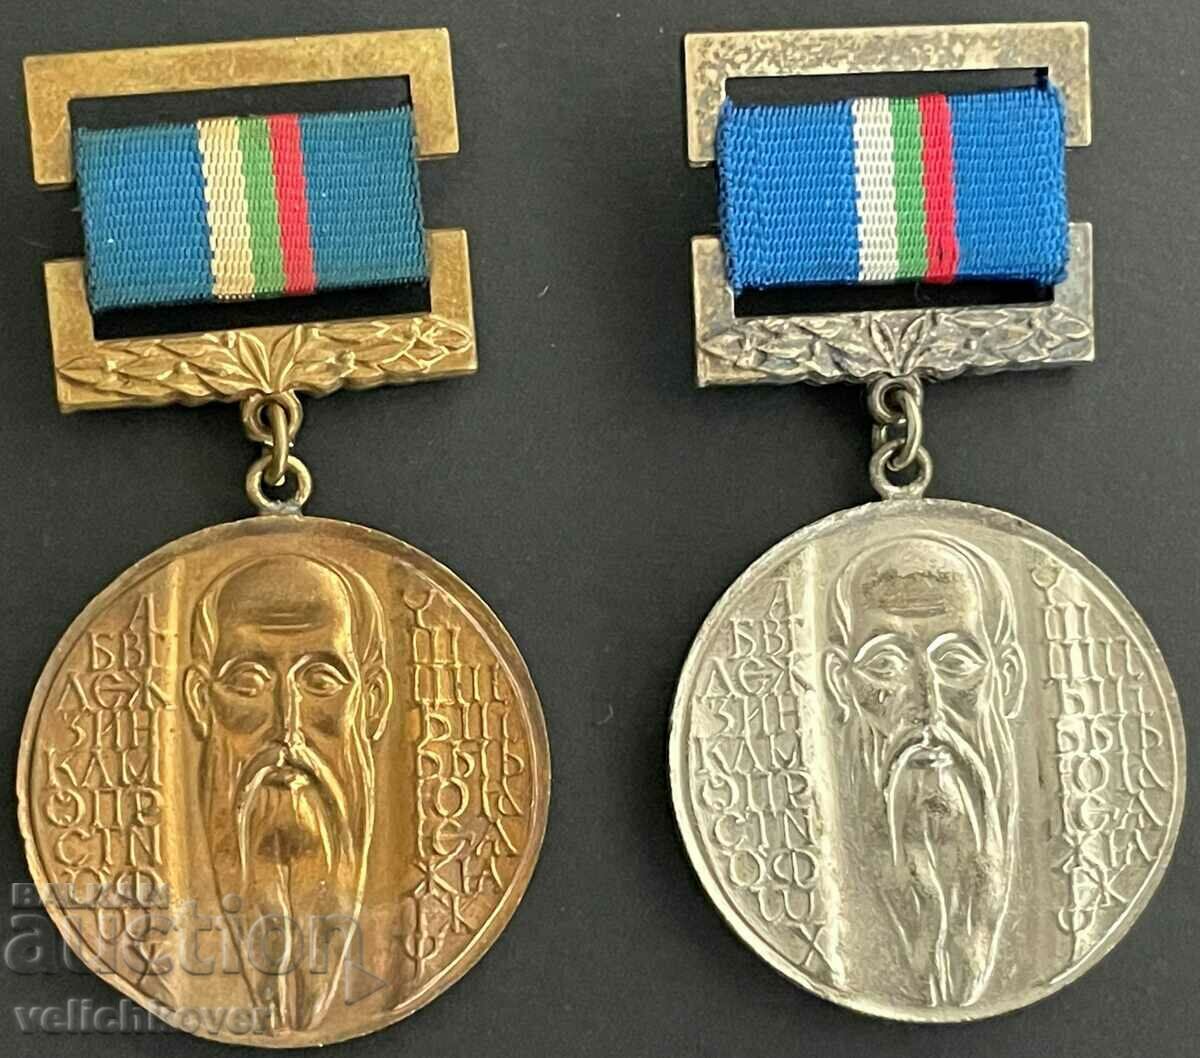 33850 Bulgaria două medalii Universitatea Kliment Ohridski